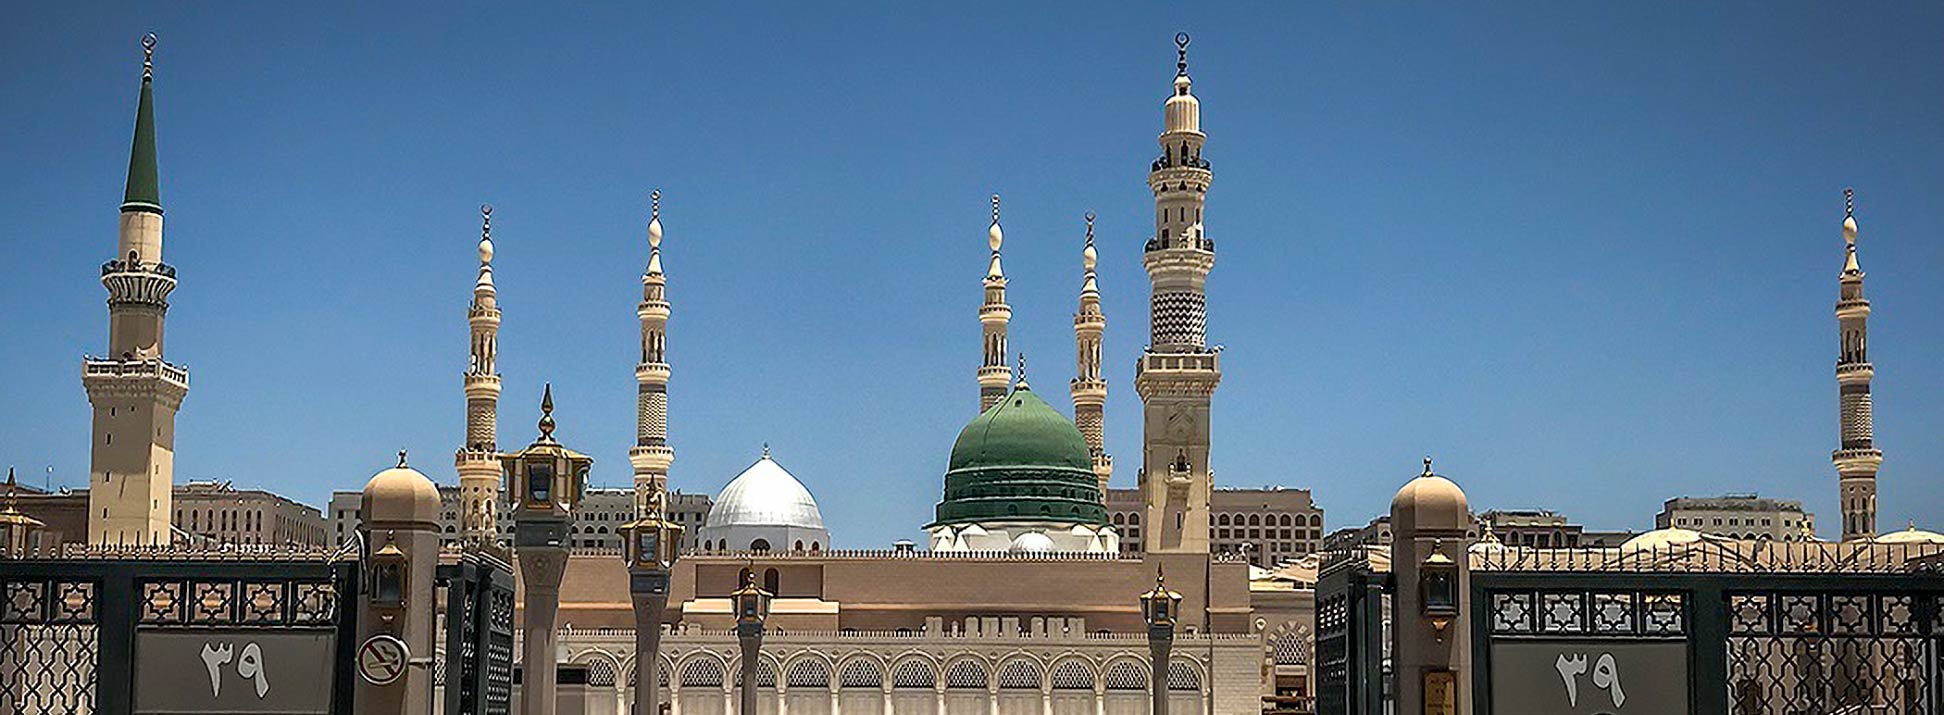 Al-Masjid an-Nabawi mosque in Medina, Saudi Arabia